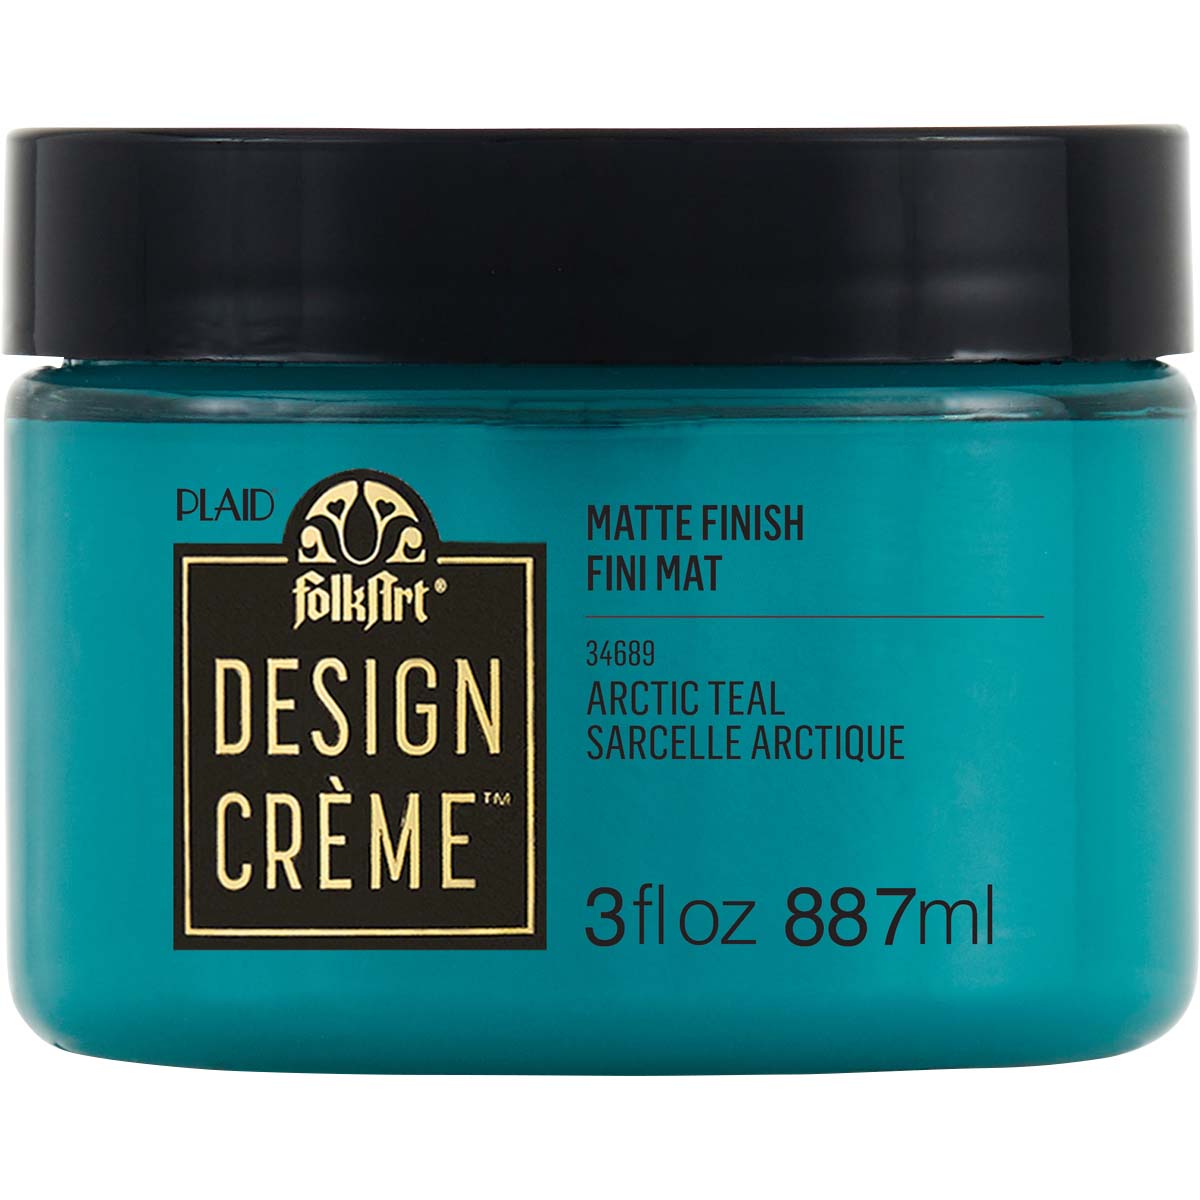 FolkArt ® Design Creme™ - Arctic Teal, 3 oz. - 34689